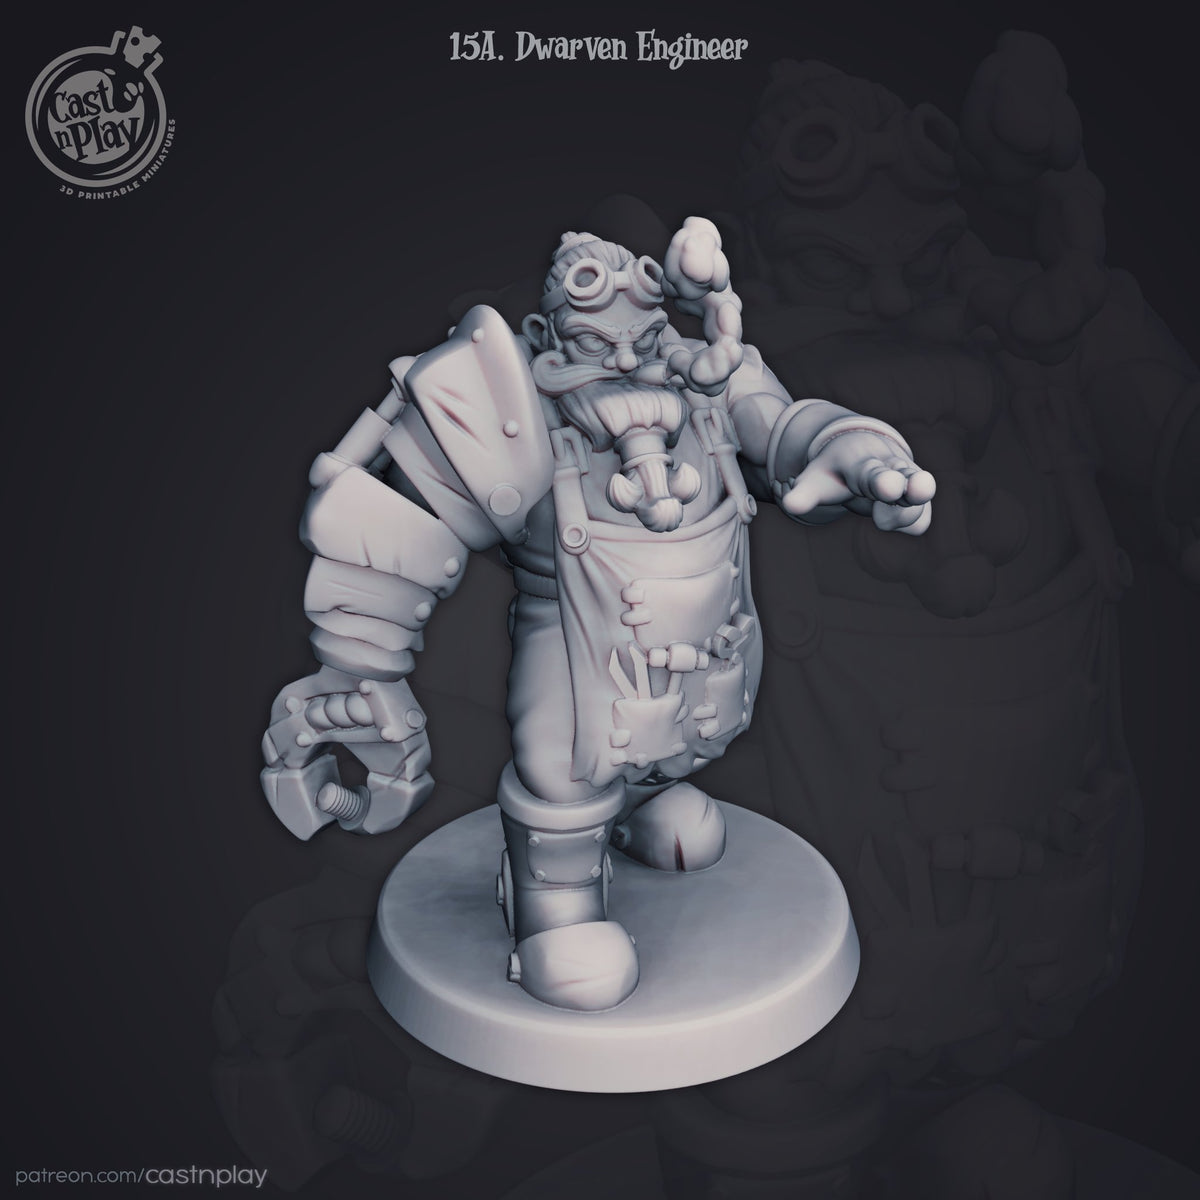 Dwarven Engineer - The Printable Dragon